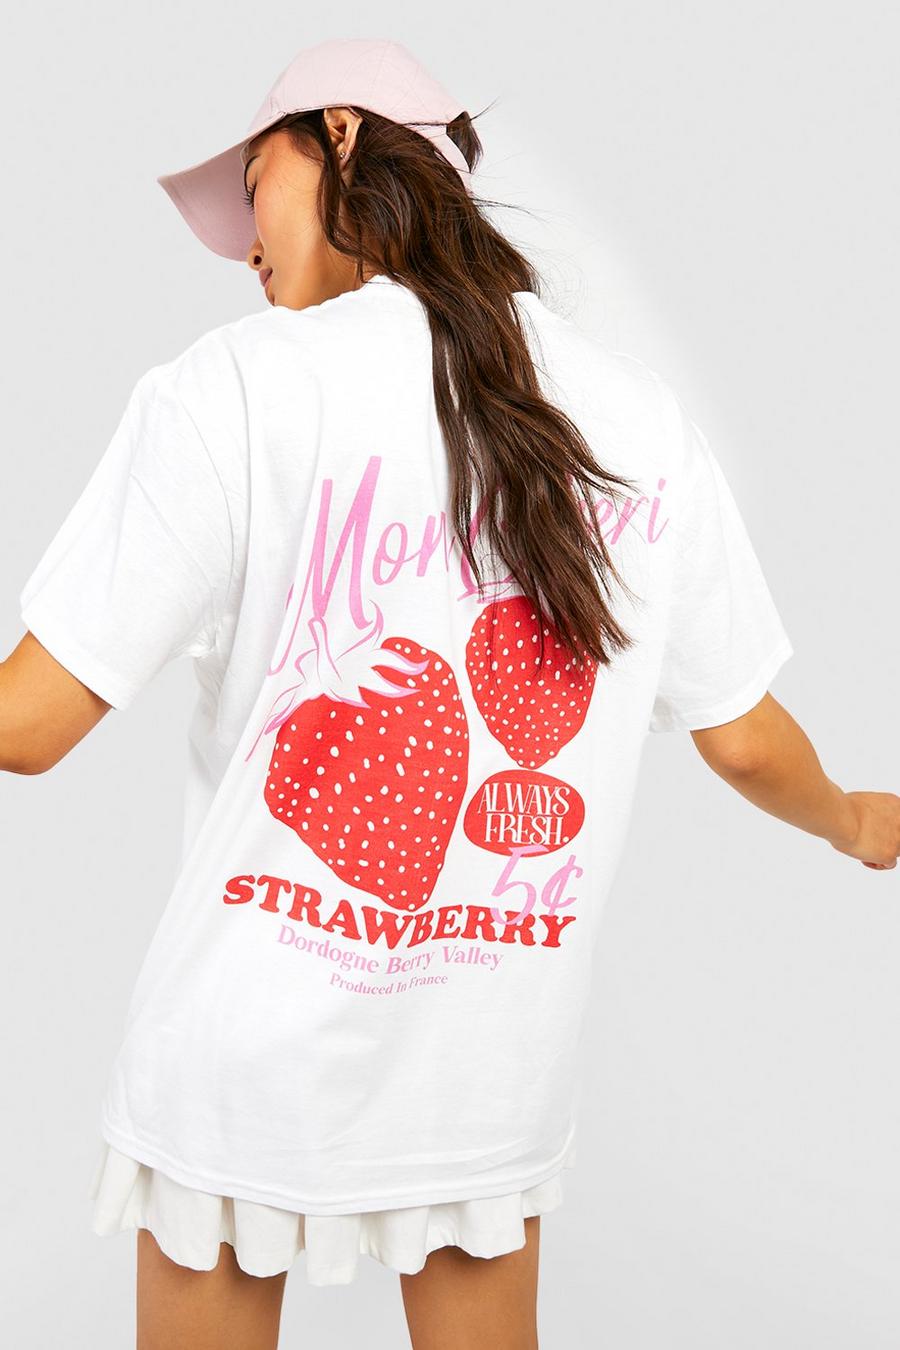 Après Swim Top – Strawberry Milk Mob